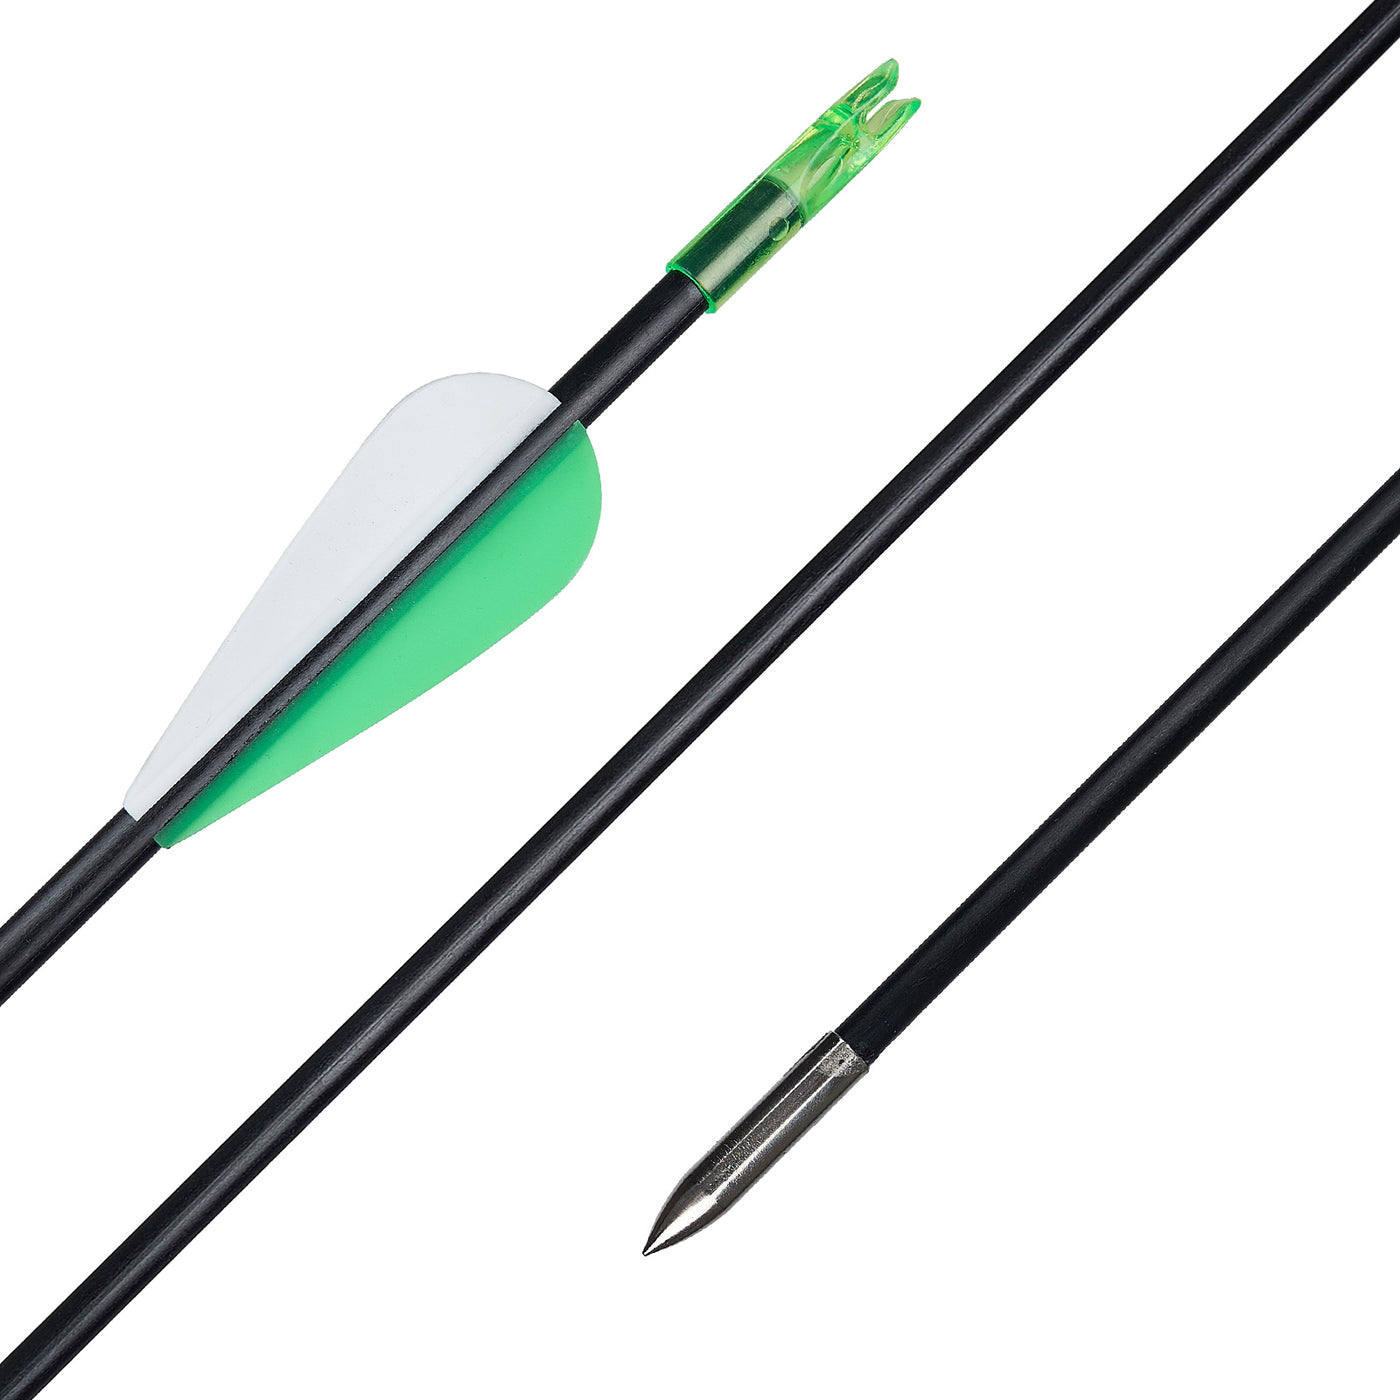 12x 31" Skinny Slim OD 6mm Spine 800 Black Green Fiberglass Archery Arrows for Recurve Bow Fixed Tips Over Nocks